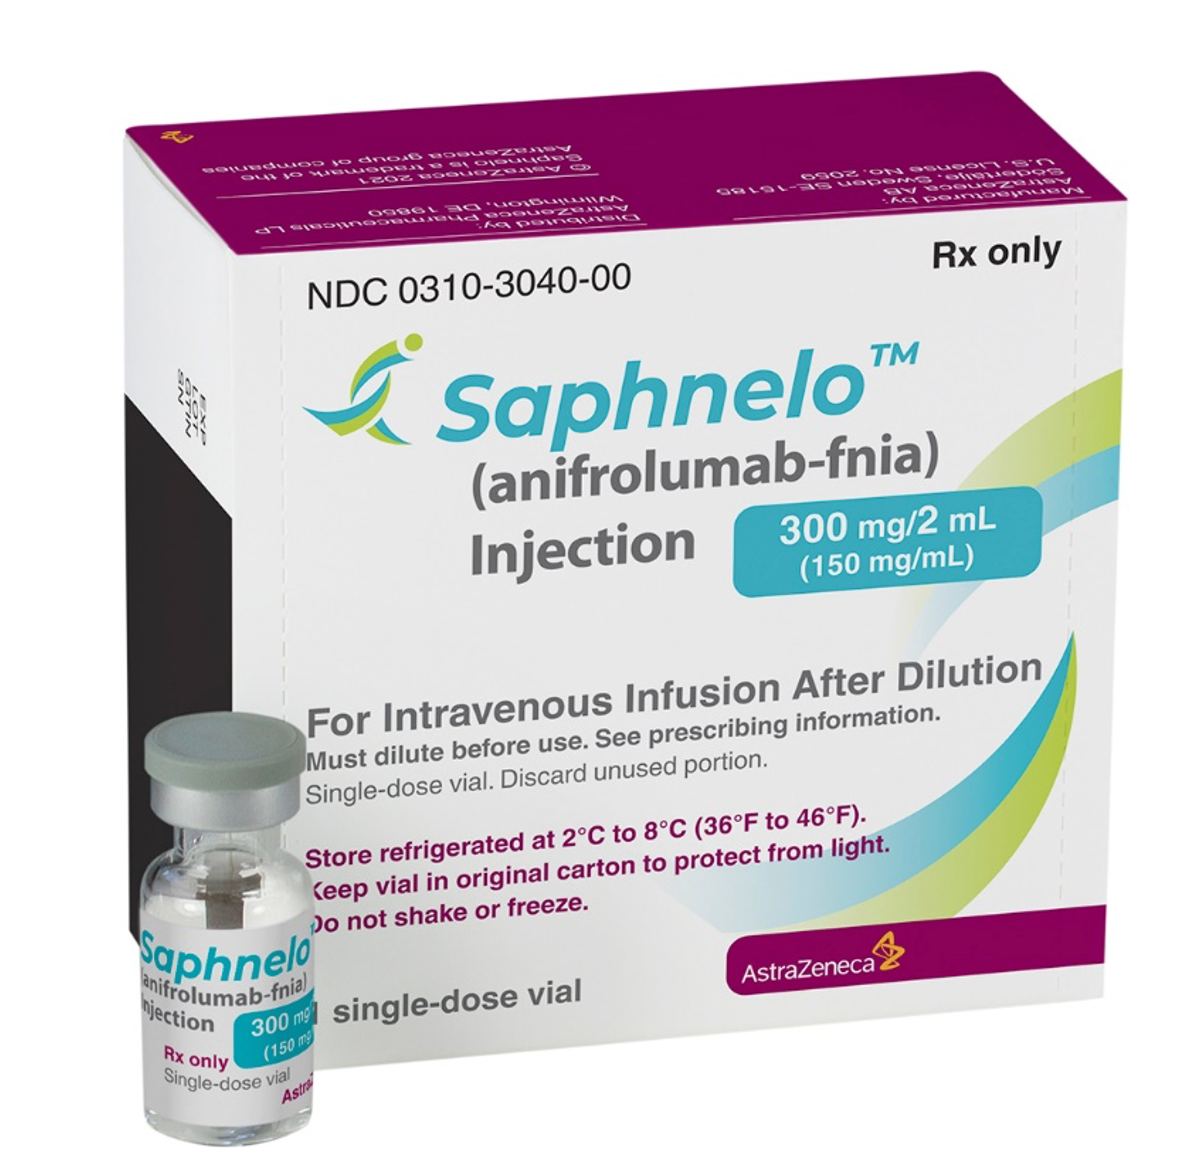 Daily Medication Pearl: Anifrolumab-fnia (Saphnelo) 